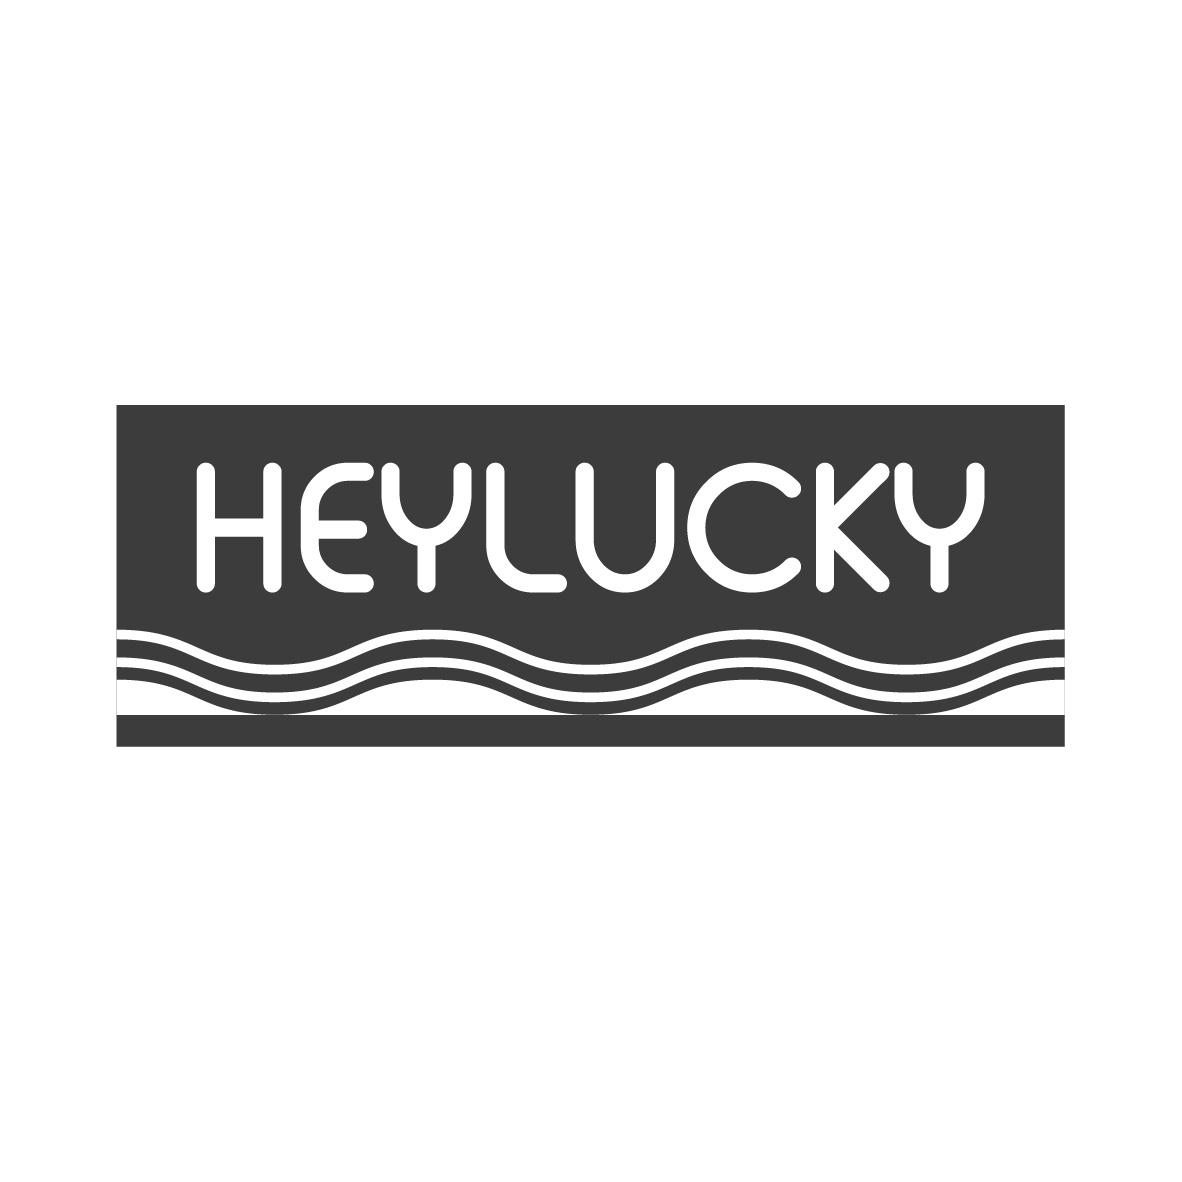 HEYLUCKY商标转让